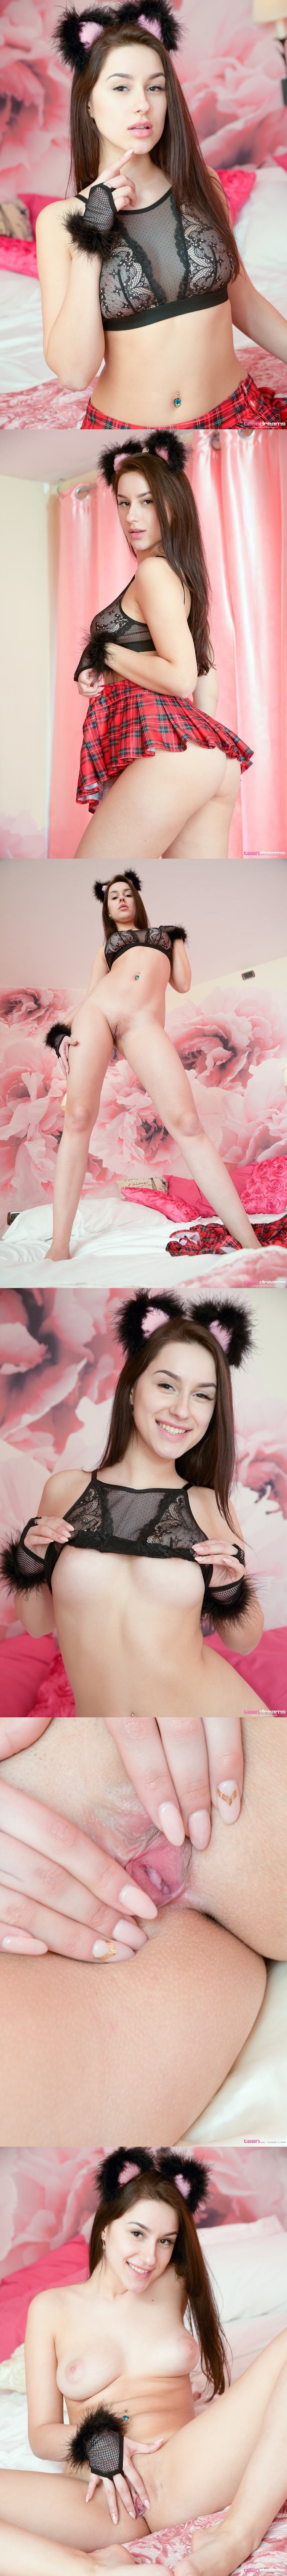 [TeenDreams] Angelina Is A Sexy Halloween Kitty angelina-sexy-photos_full_wm.zip-jk-